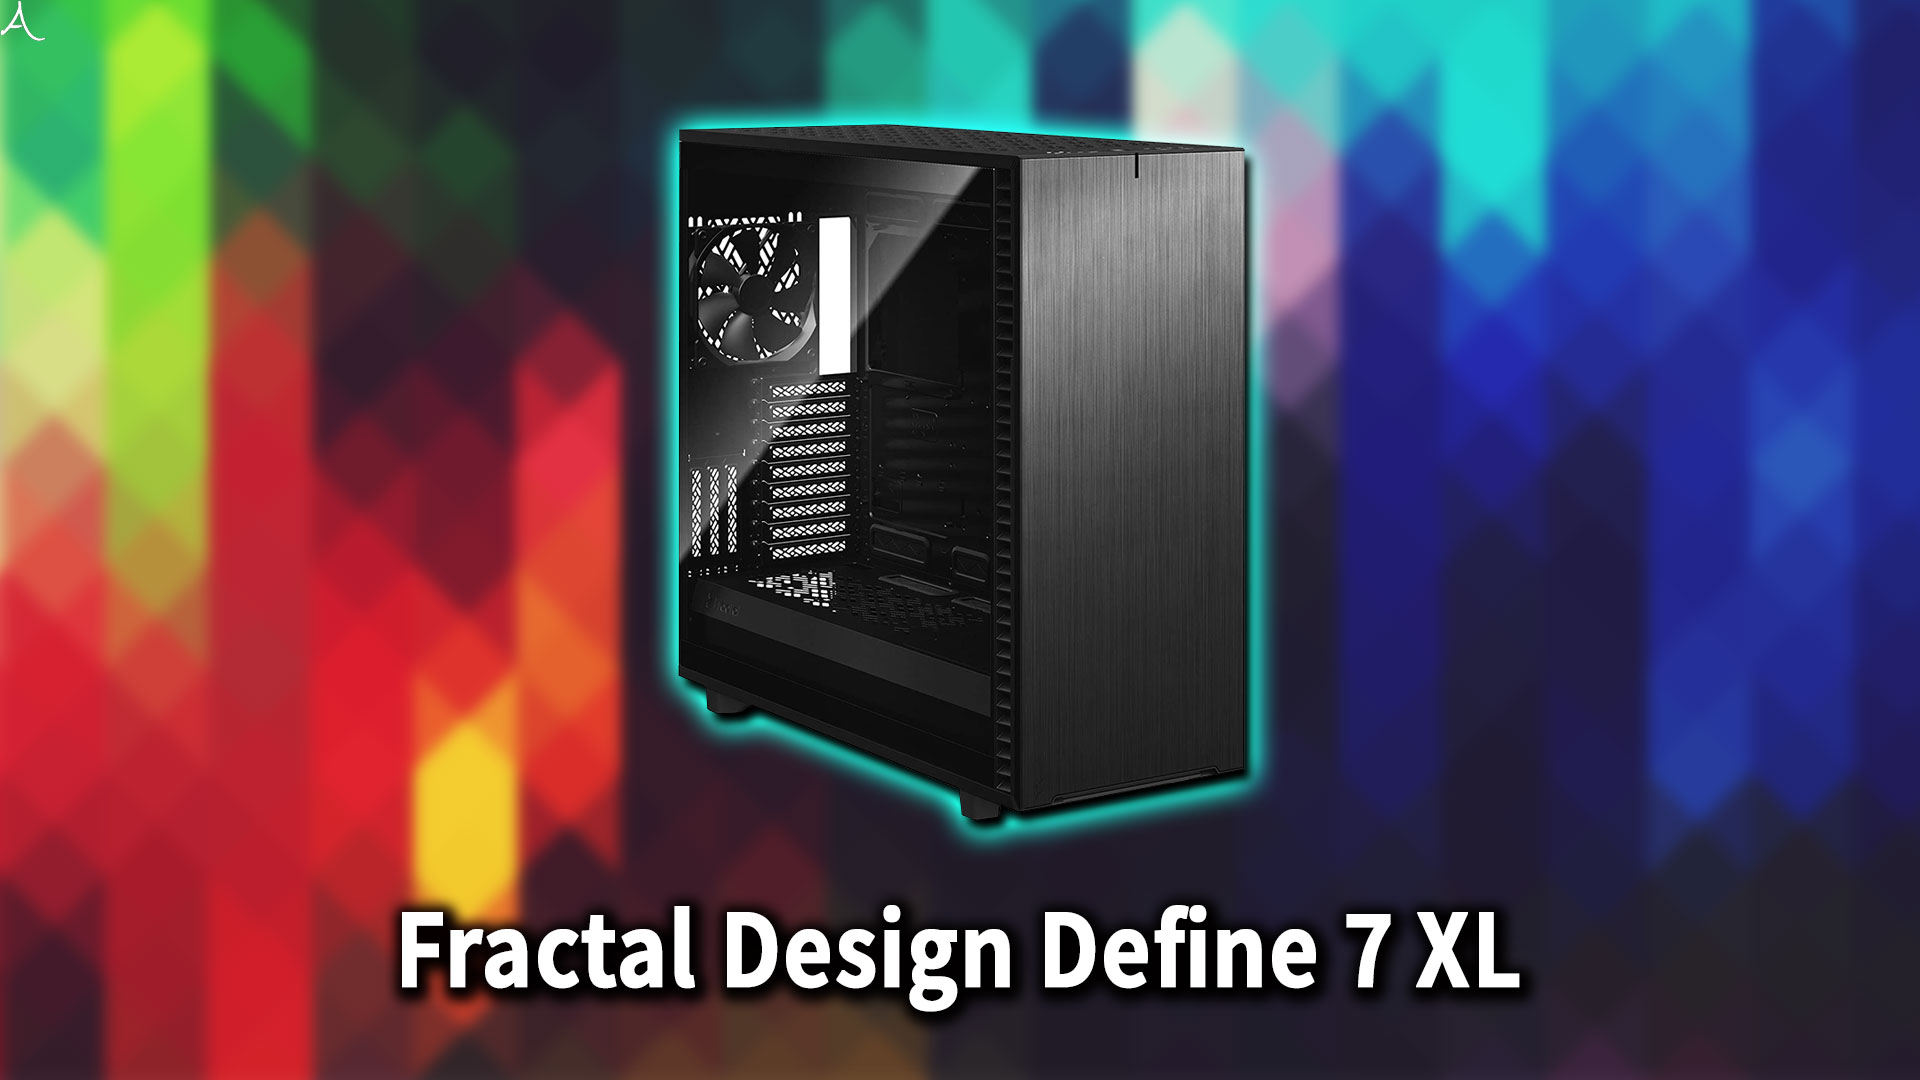 ｢Fractal Design Define 7 XL｣のサイズ・大きさはどれくらい？